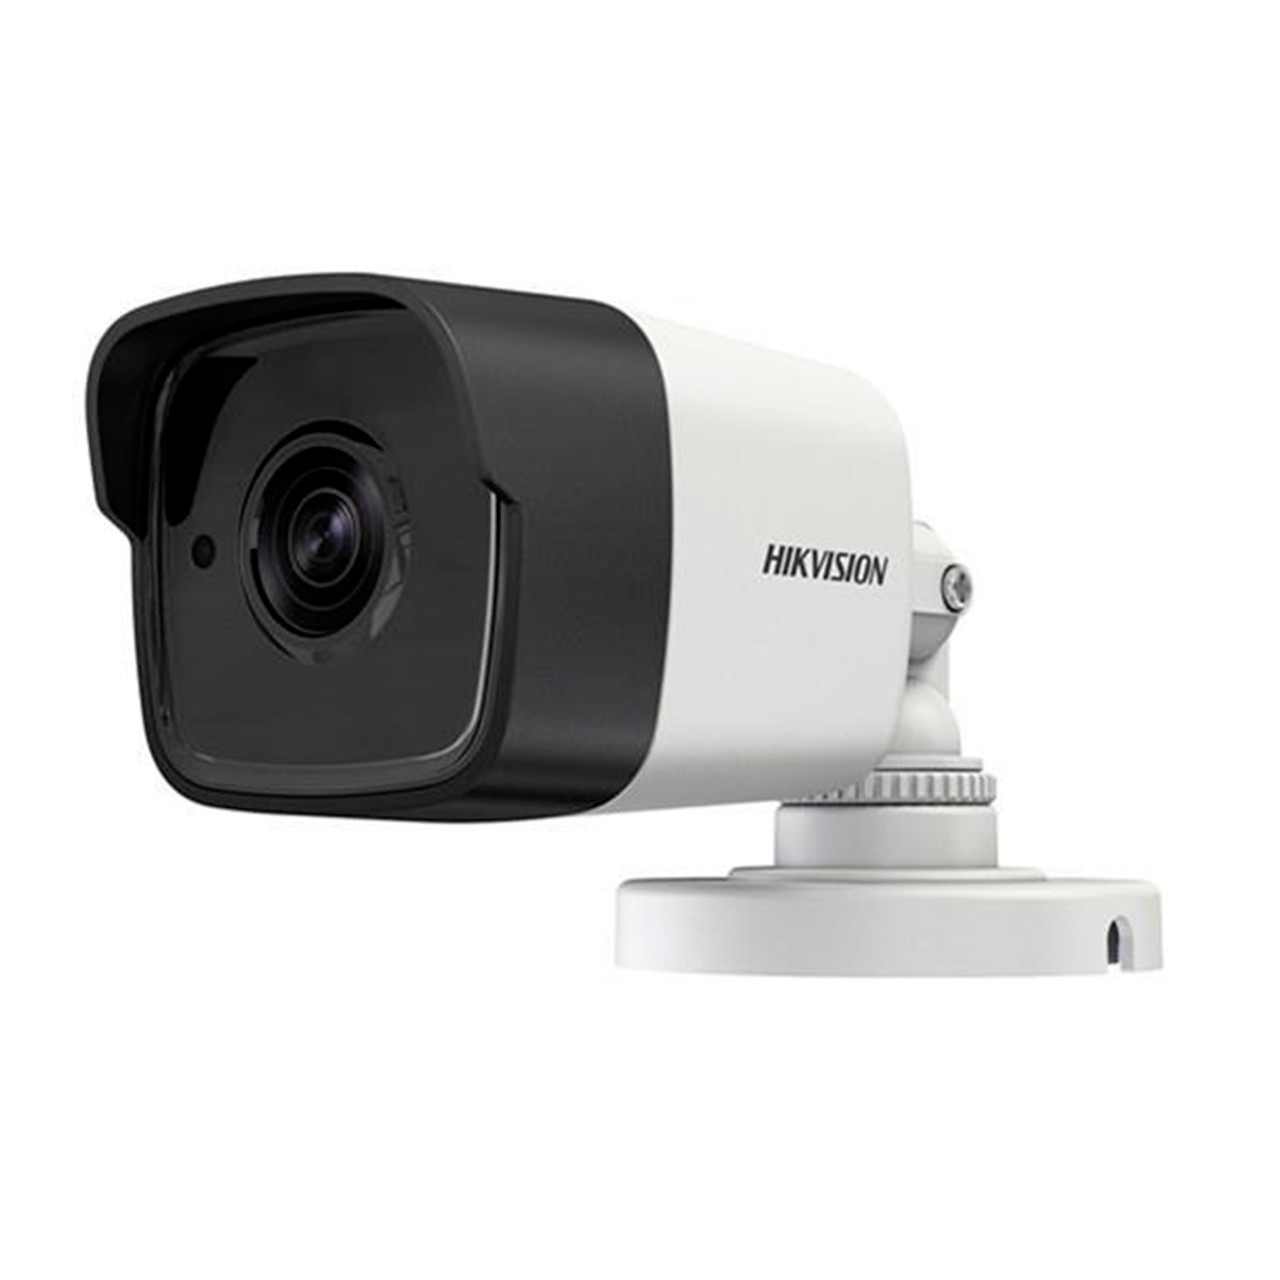 hikvision surveillance cameras